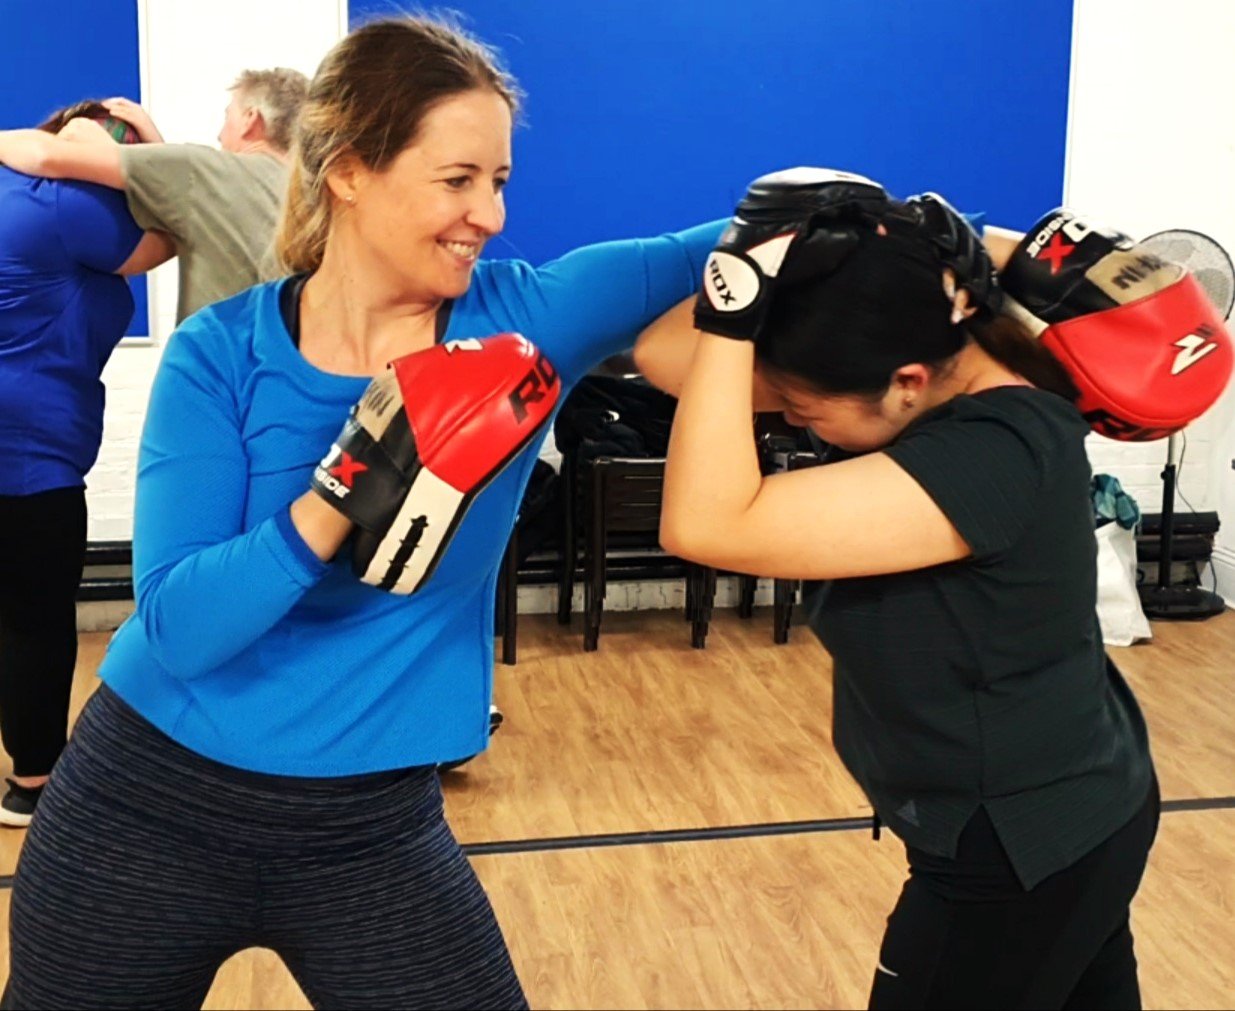 Kickboxing, Boxing, Jujitsu, Self Defense and Martial Arts Classes / Training in Victoria, Pimlico, Westminster, Croydon, Norbury, Thornton Heath, Streatham